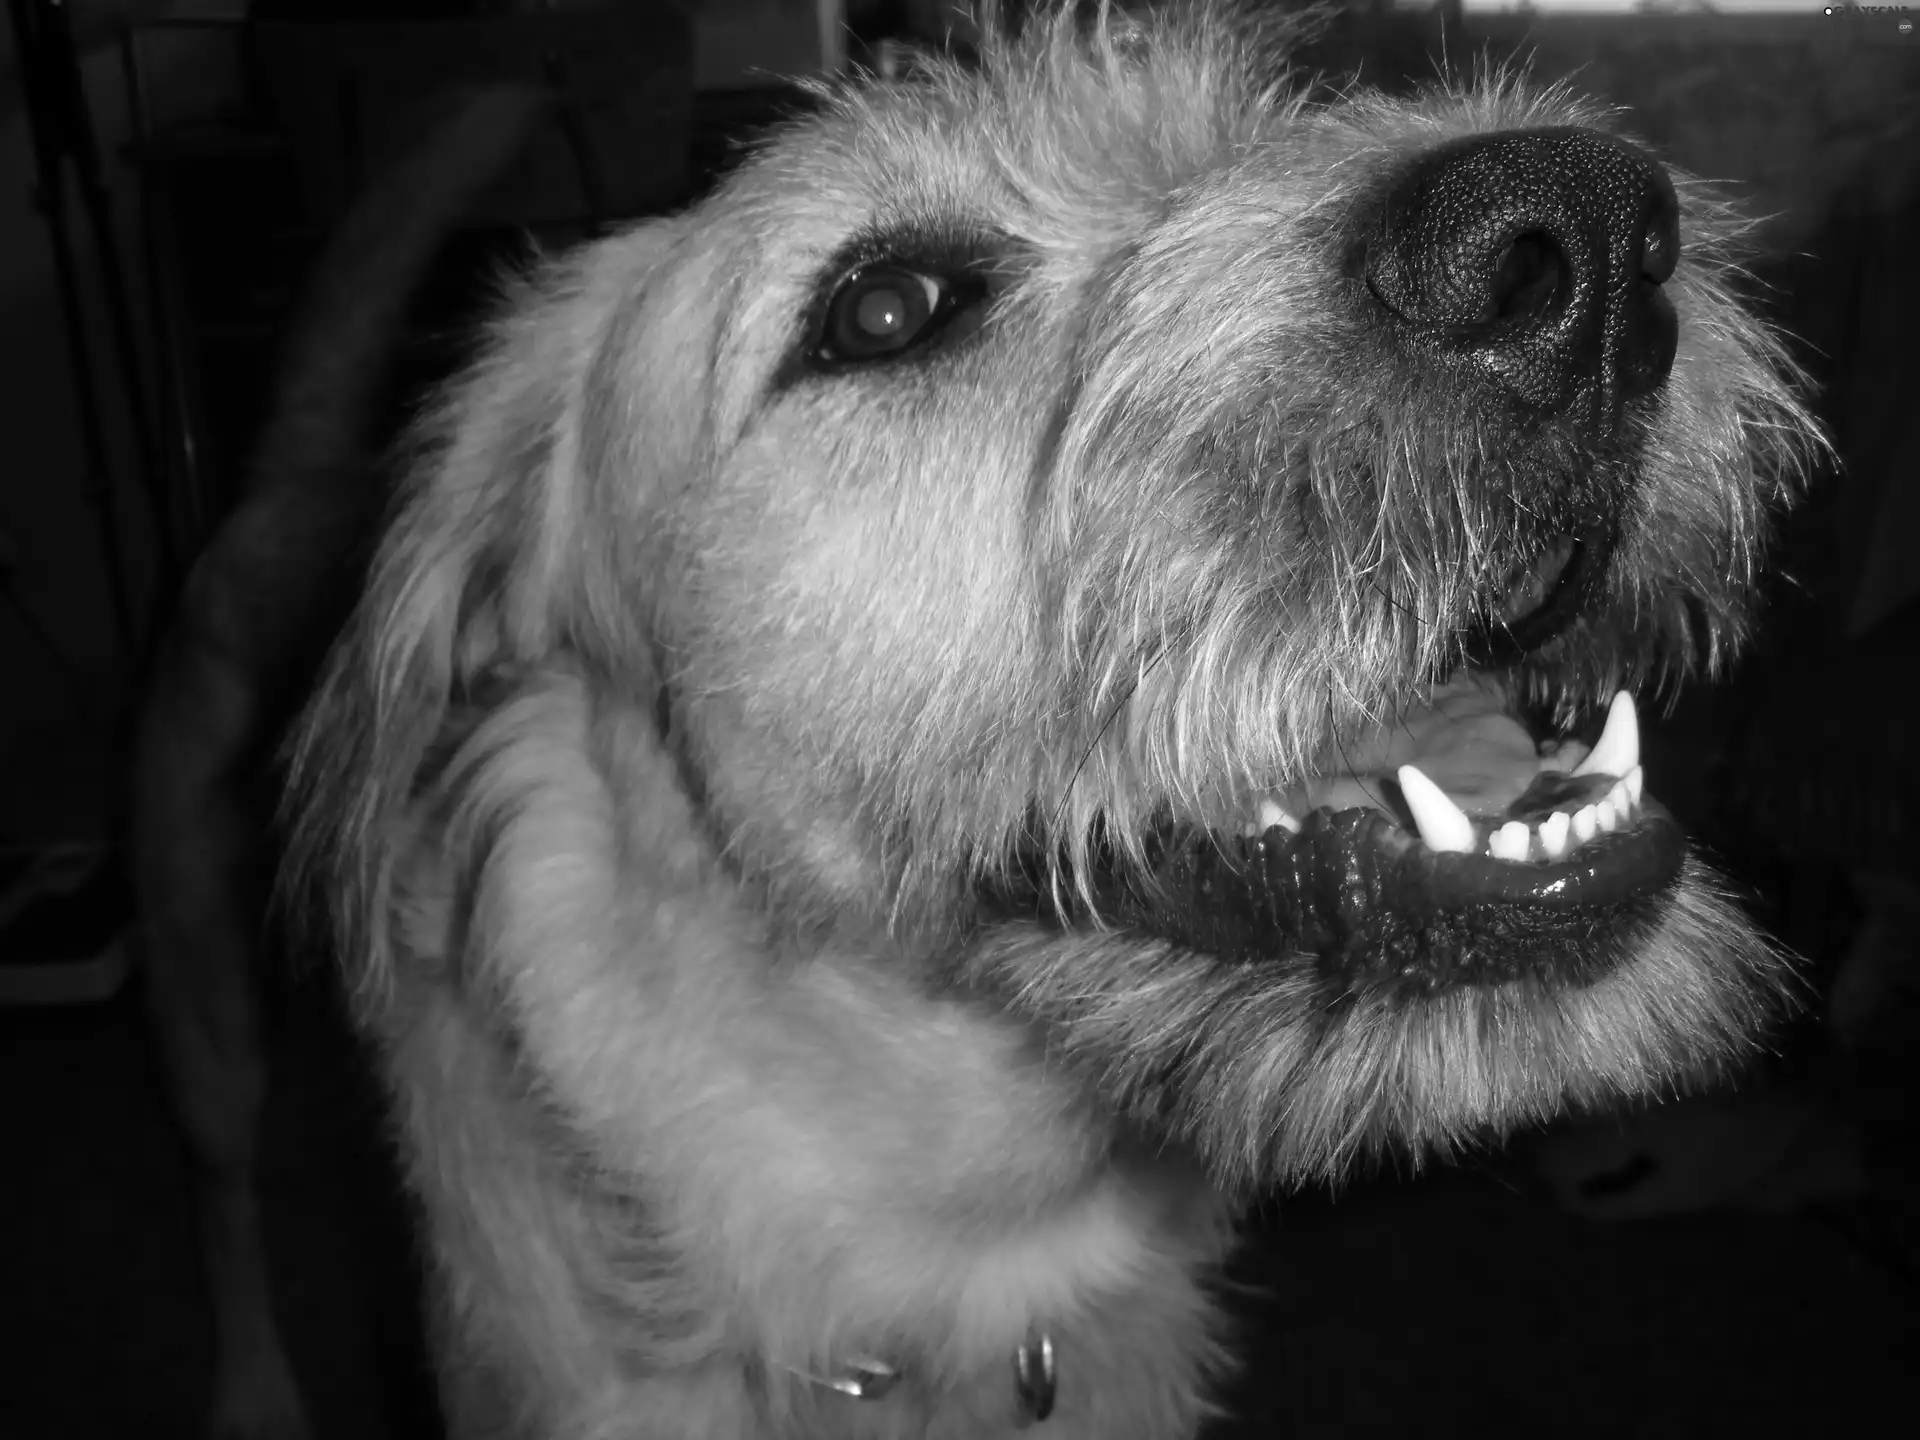 Irish Wolfhound, mouth, canines